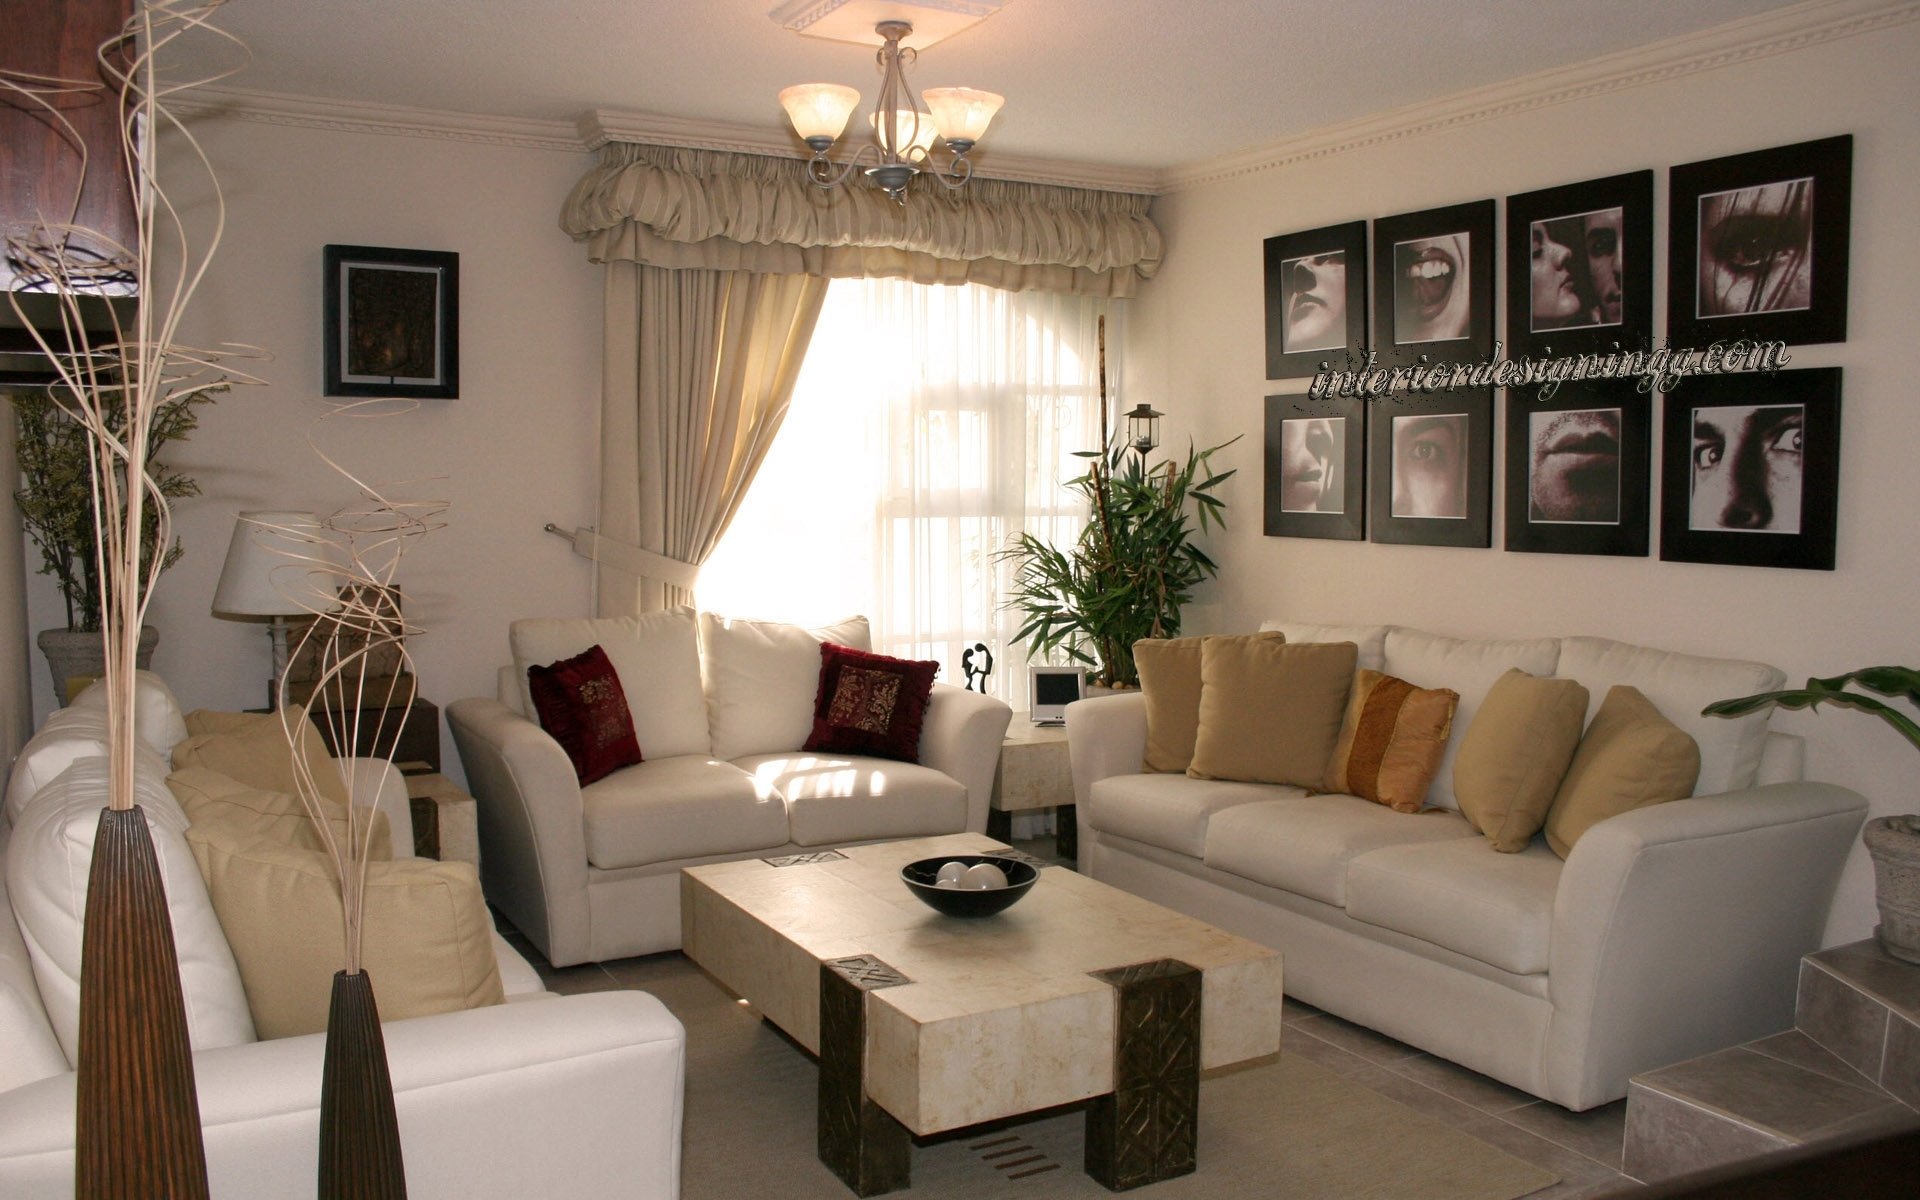 10 Stylish Home Decor Ideas Living Room decor ideas living room inspiration home decoration interior design 3 2022